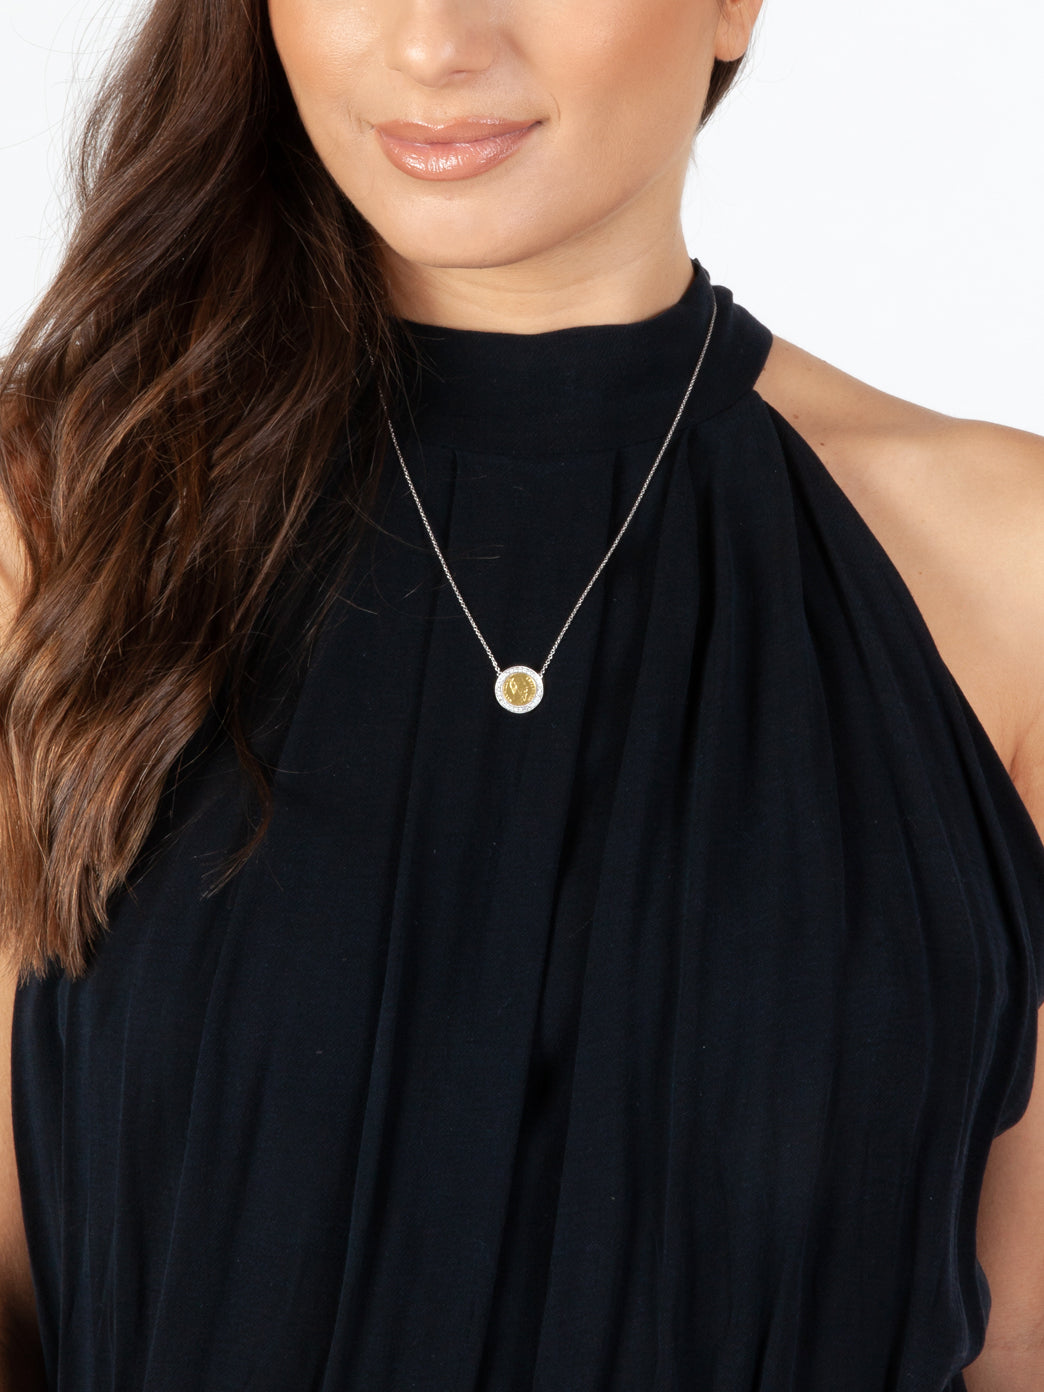 Fiorina Jewellery Gold Button Necklace Model Black Top